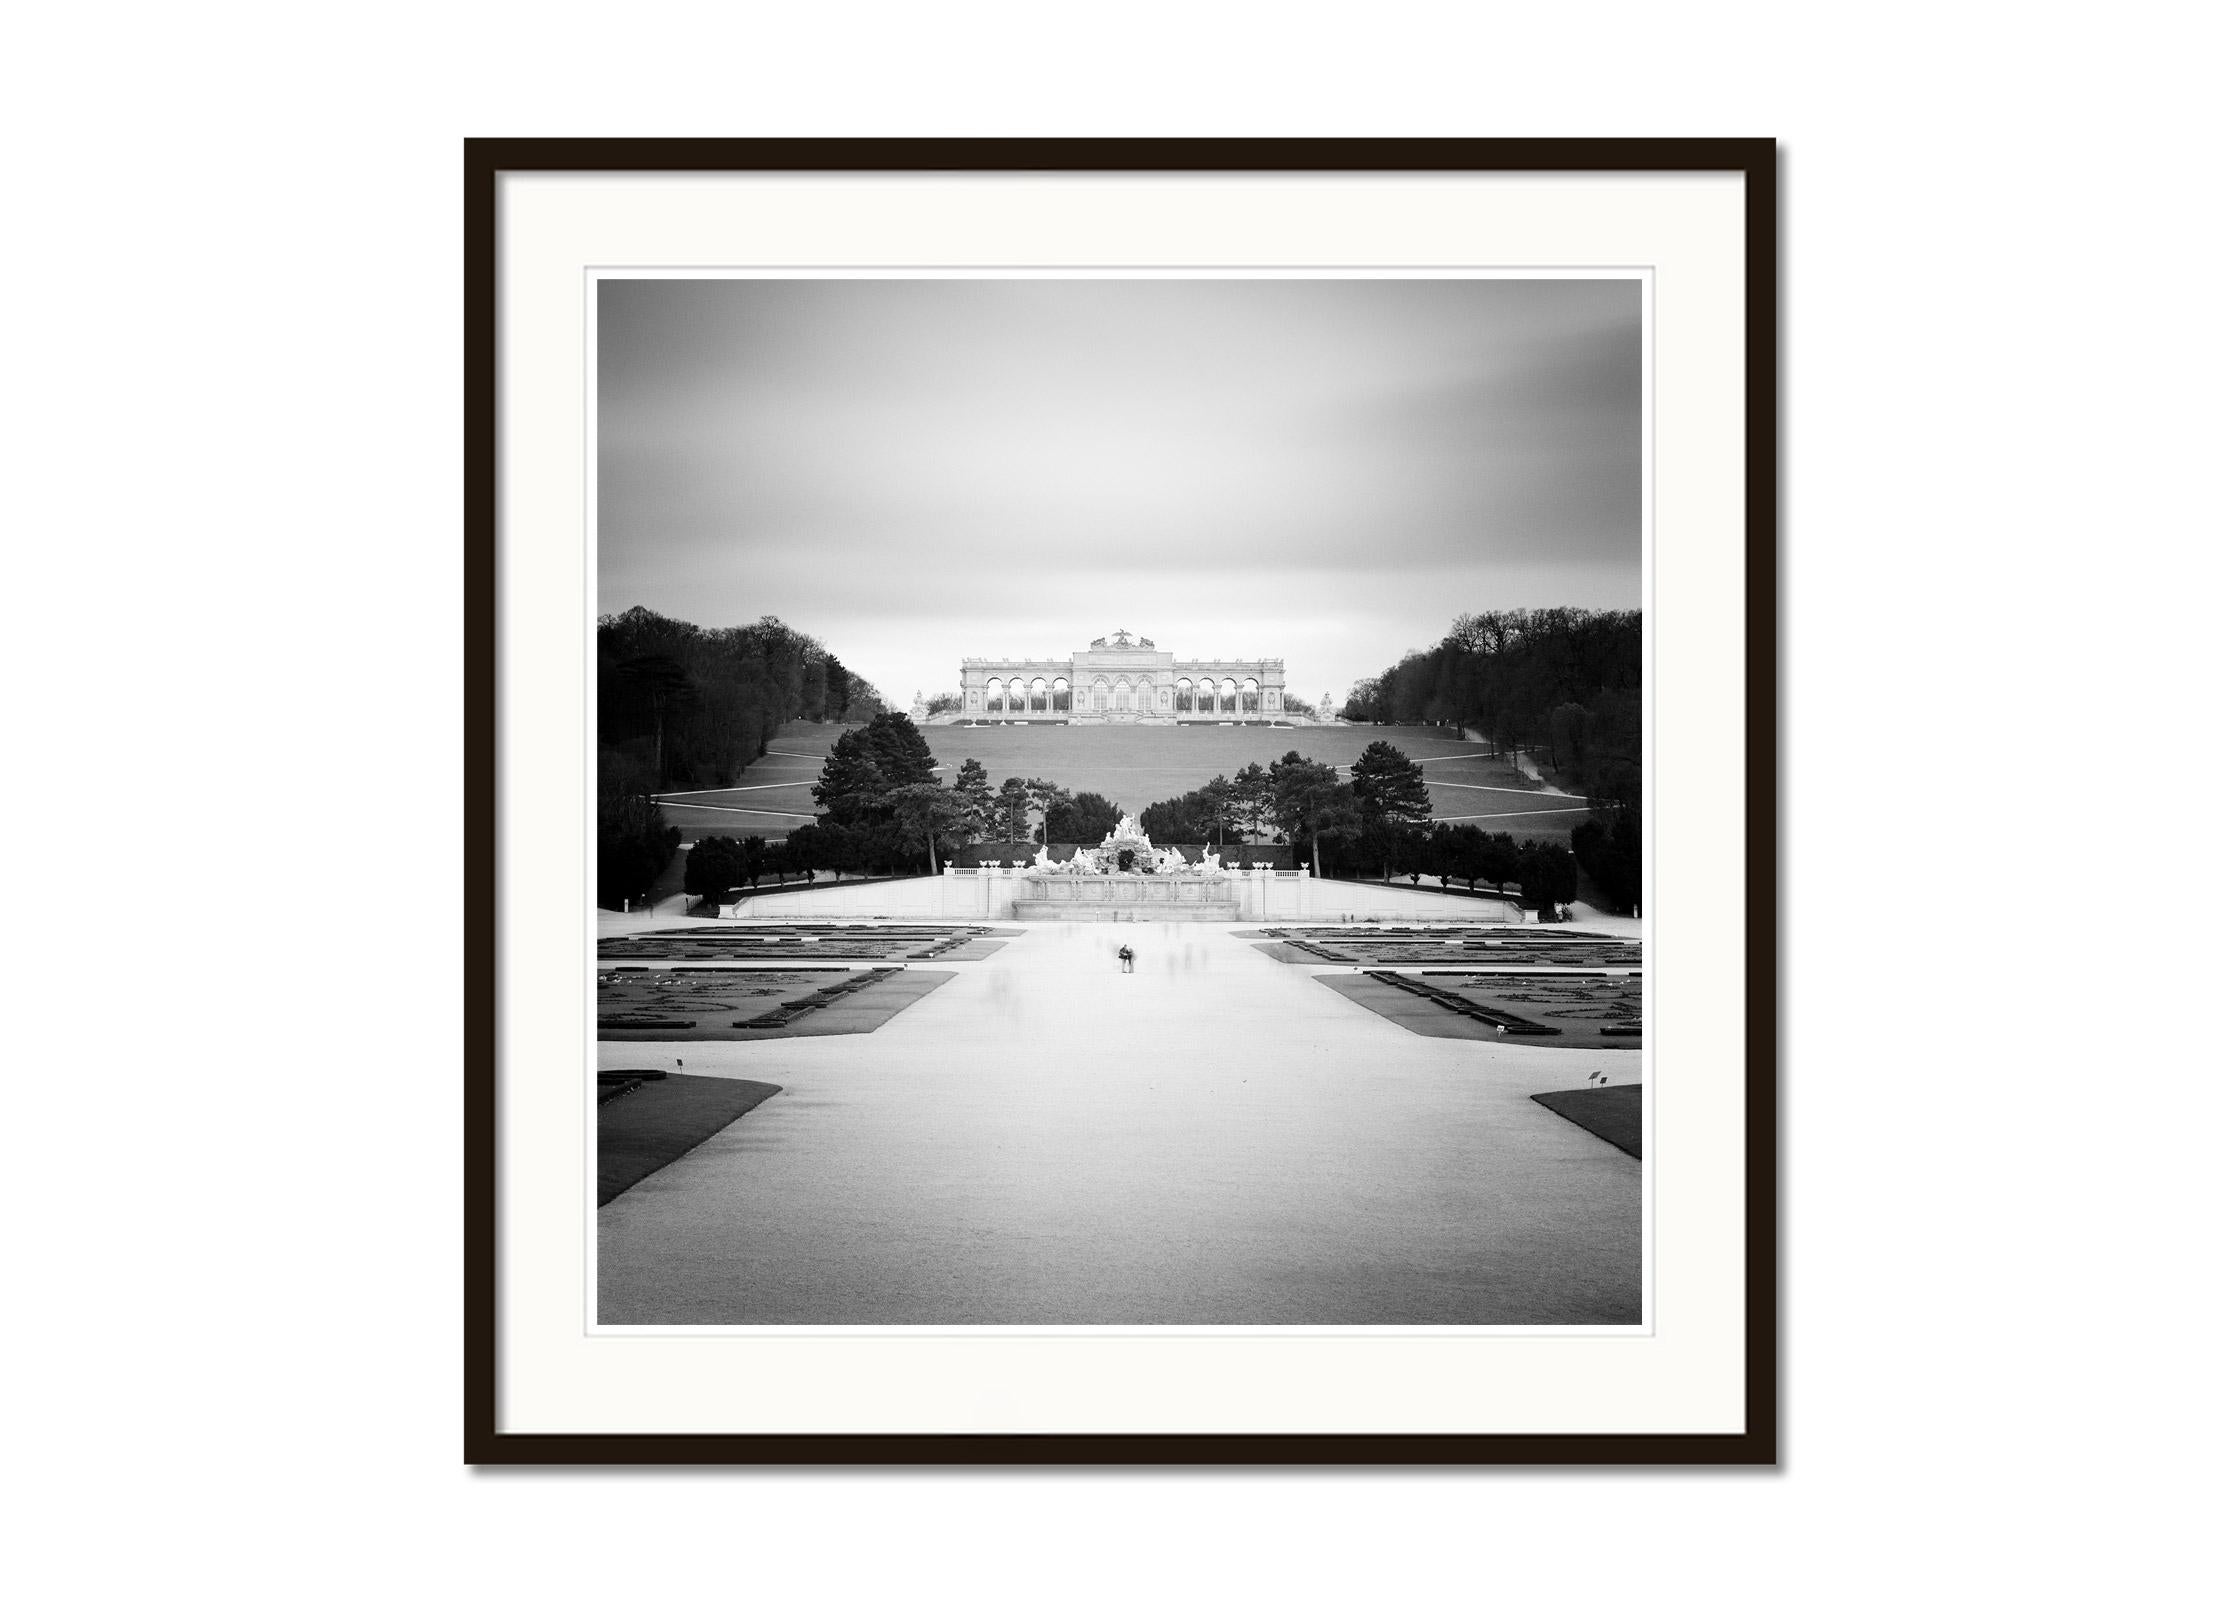 Gloriette, Vienna, Schloss Schoenbrunn, black and white cityscape photo print - Contemporary Photograph by Gerald Berghammer